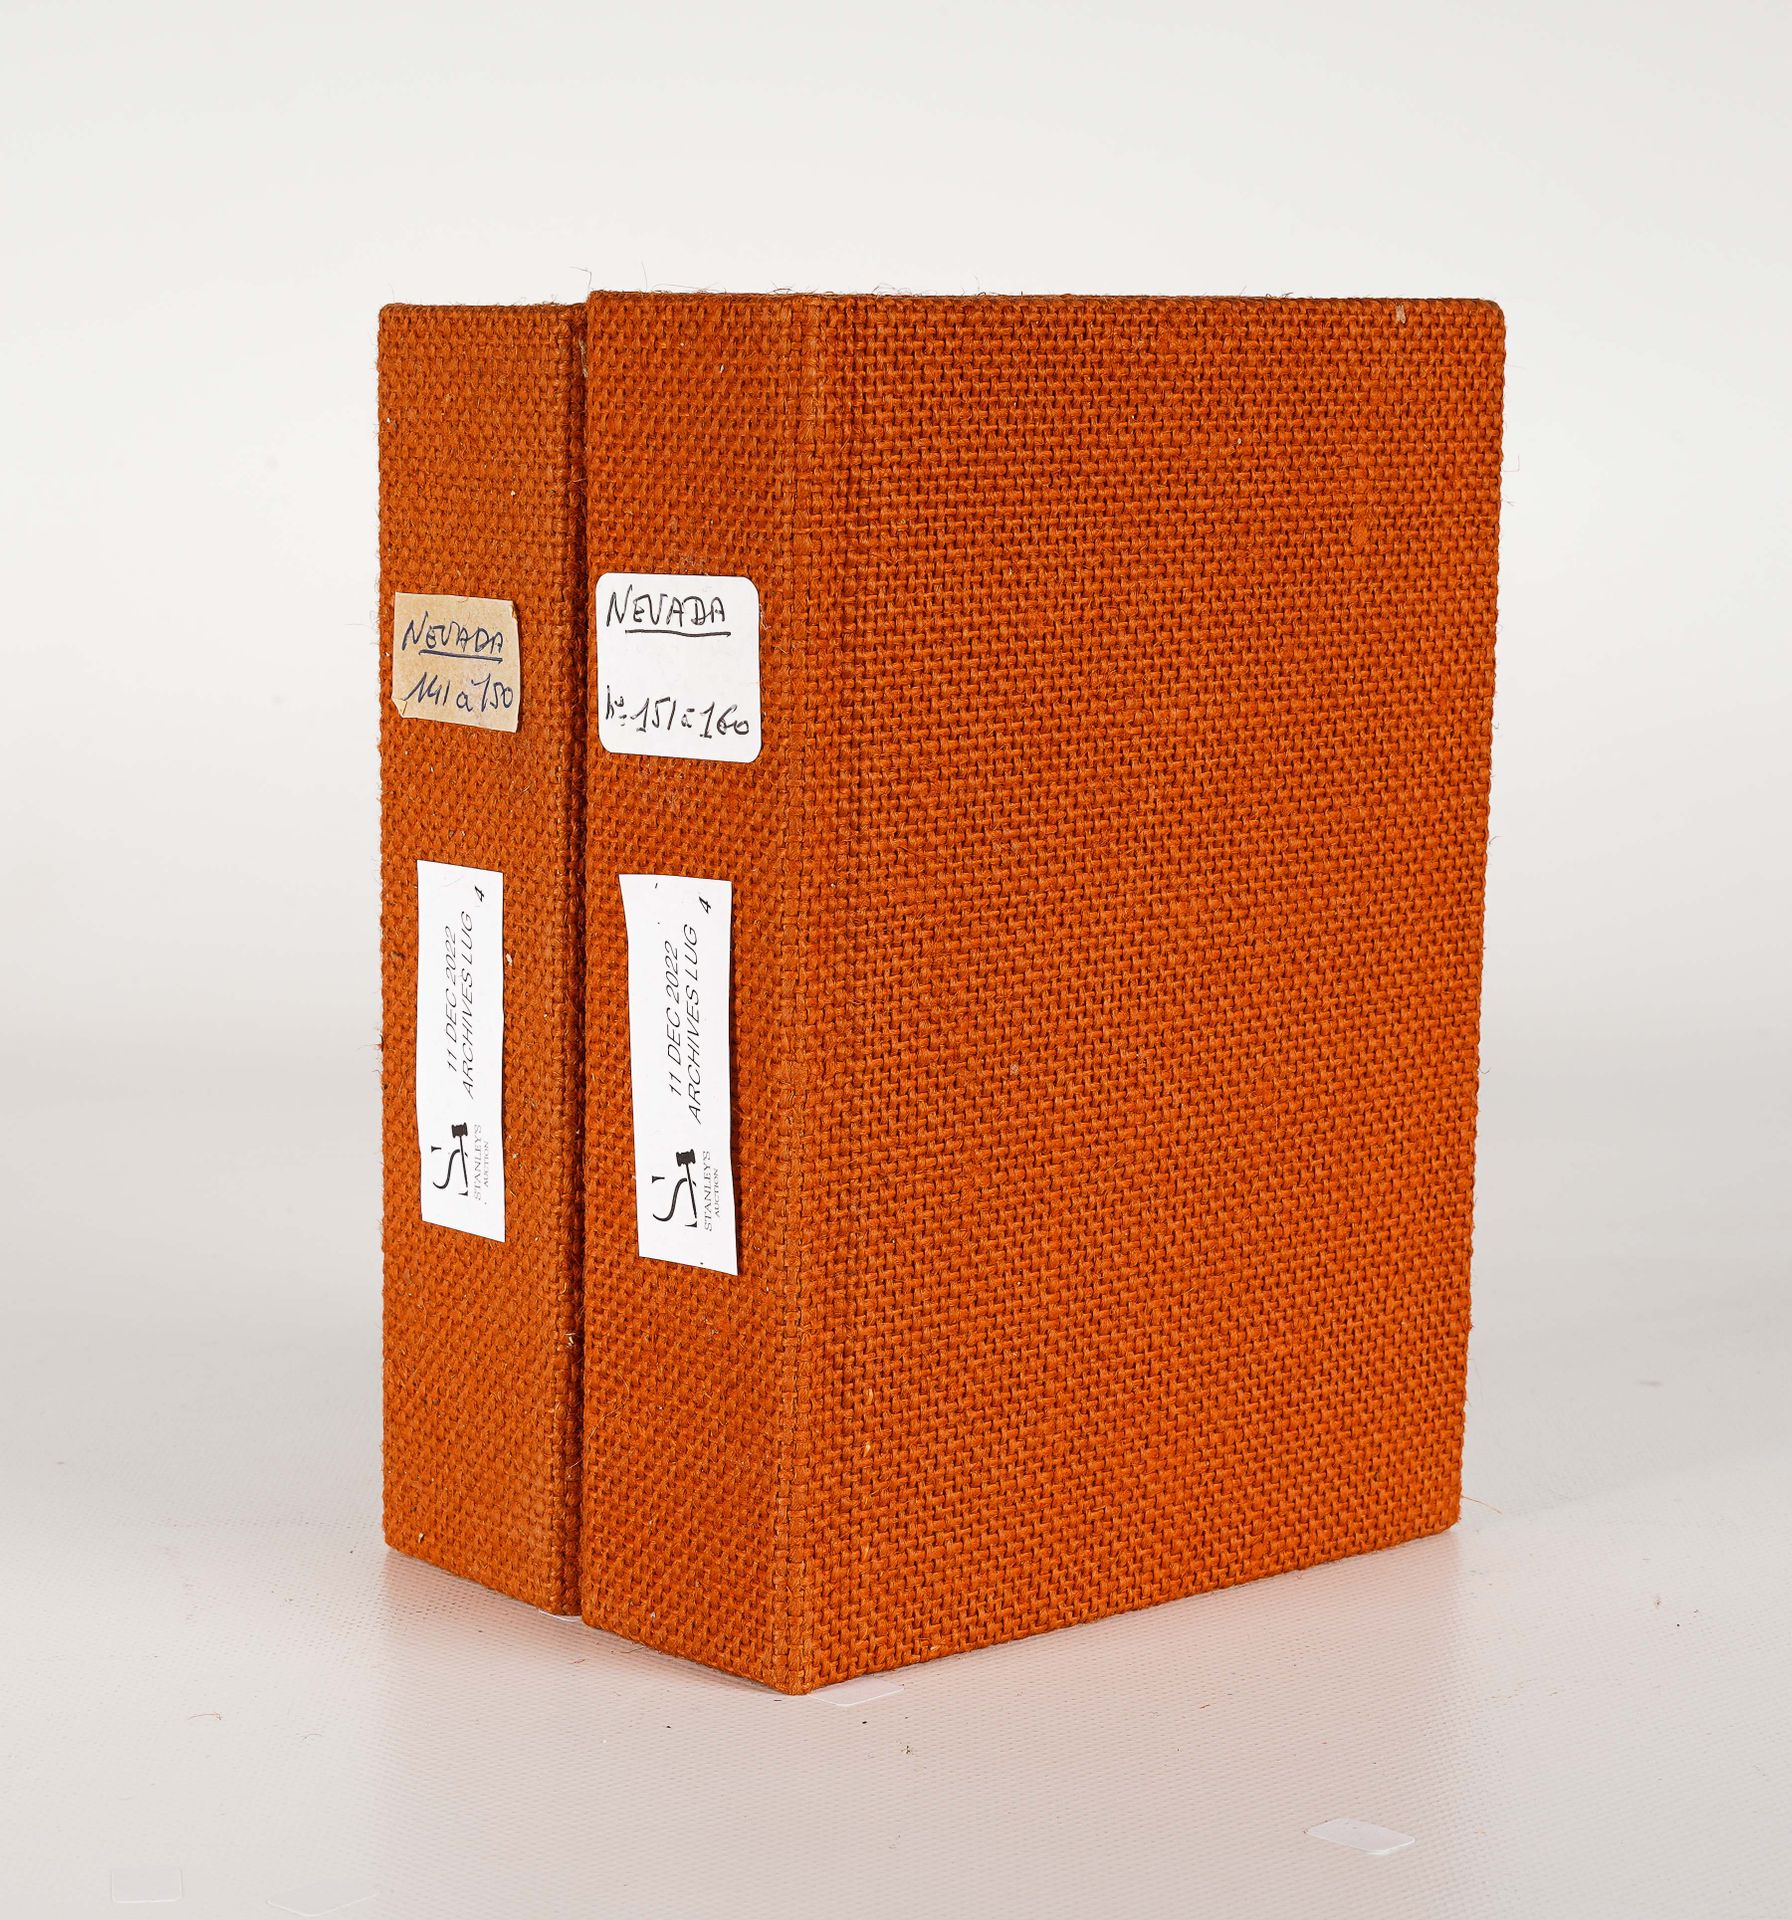 LUG SEMIC, ARCHIVES COMICS 两个LUG活页夹，内有NEVADA第141至160号，橙色布，尺寸H 18 x 13厘米